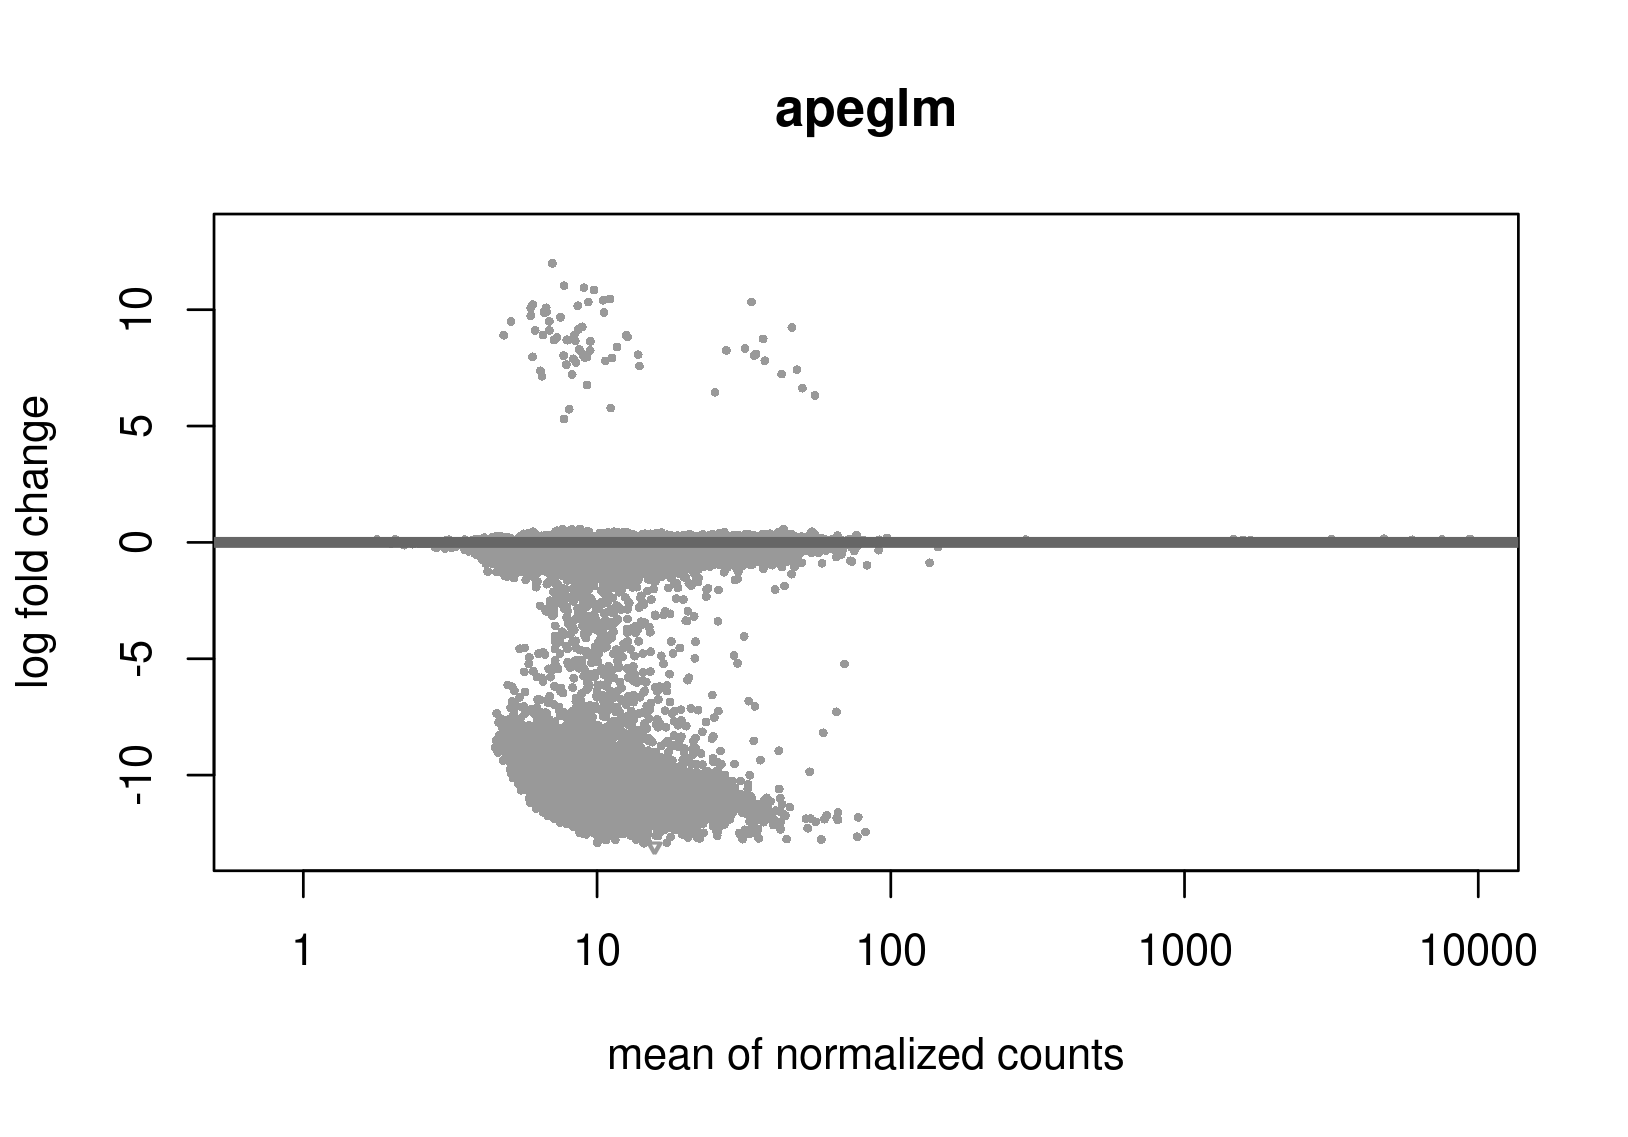 apeglm-shrunk LFCs